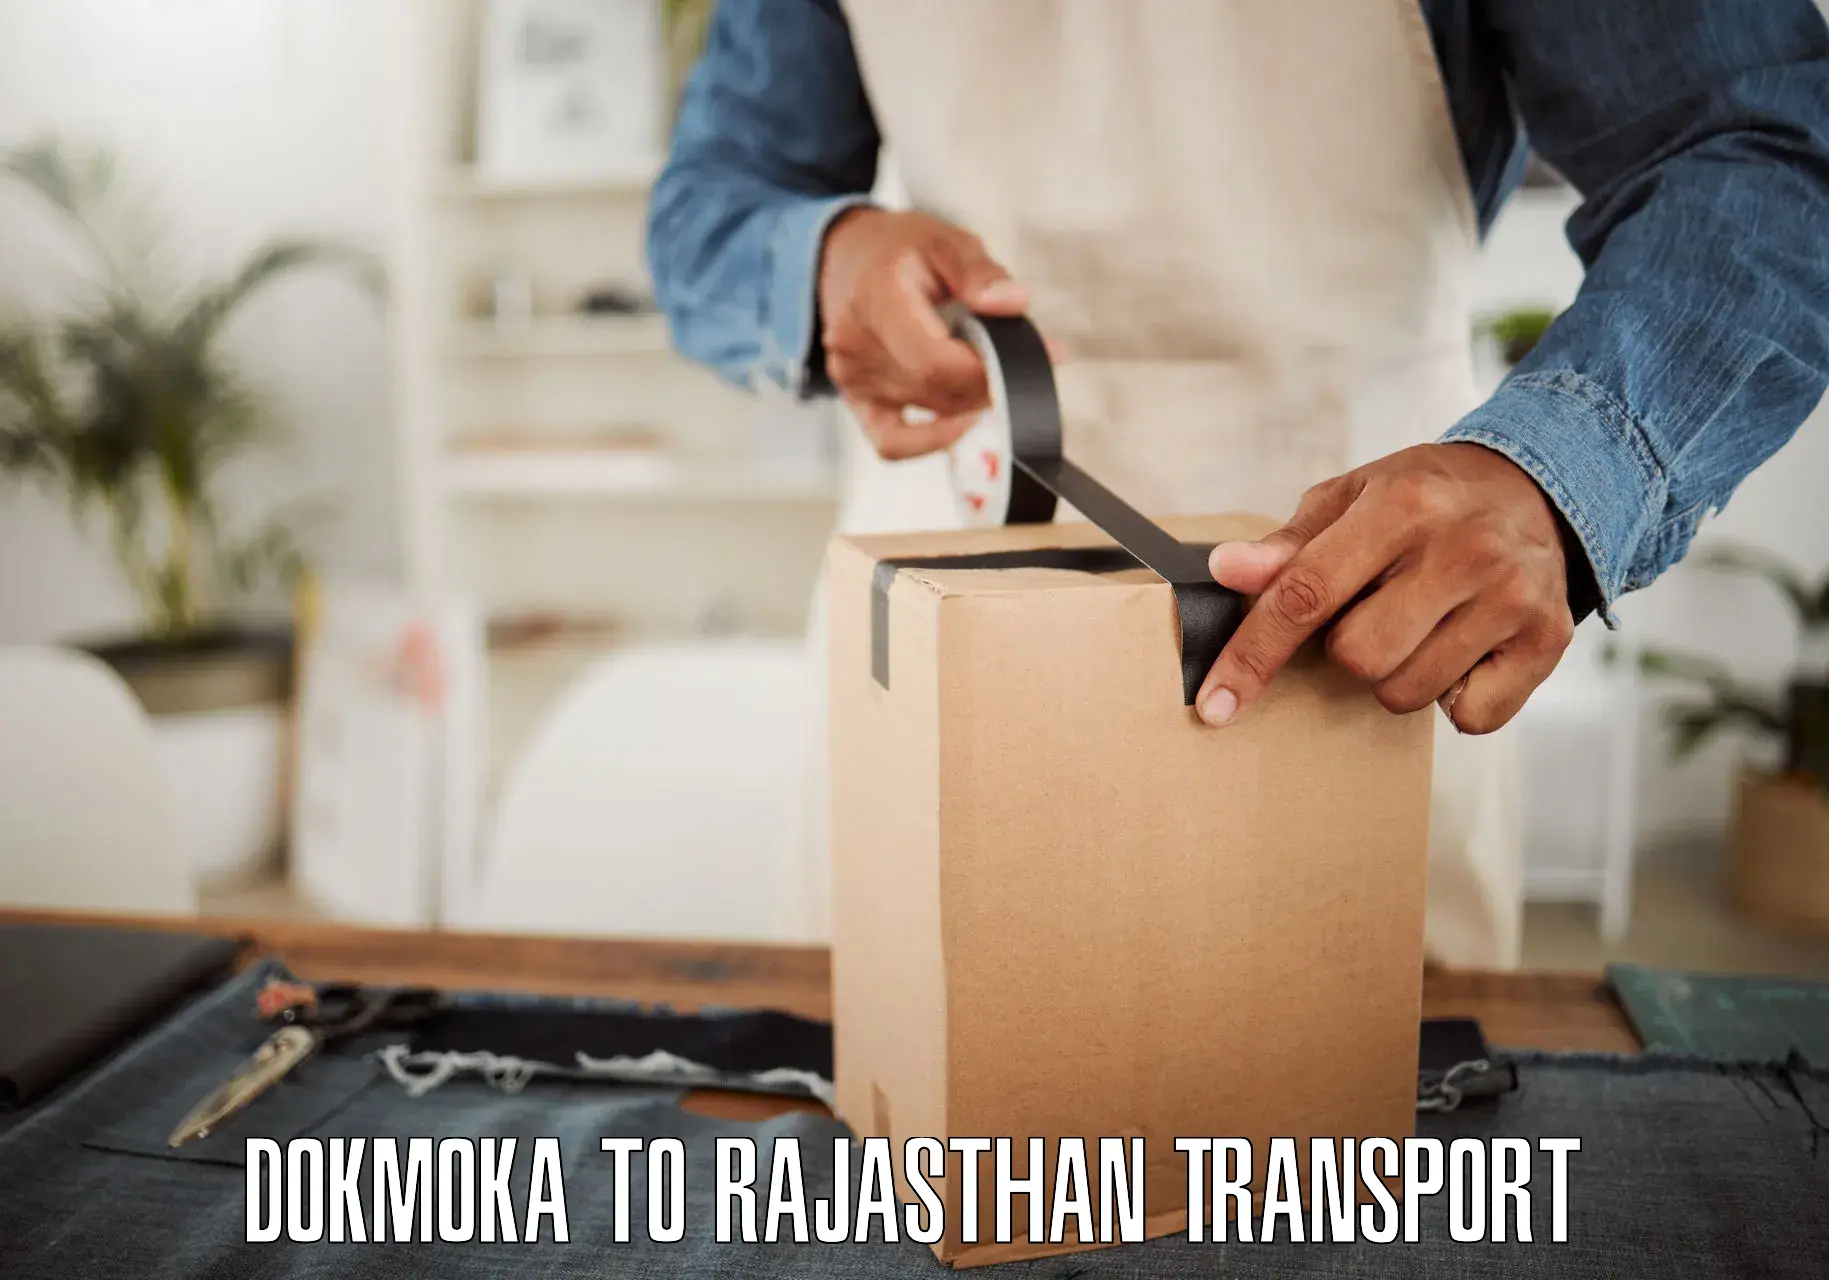 Transport in sharing Dokmoka to Asind